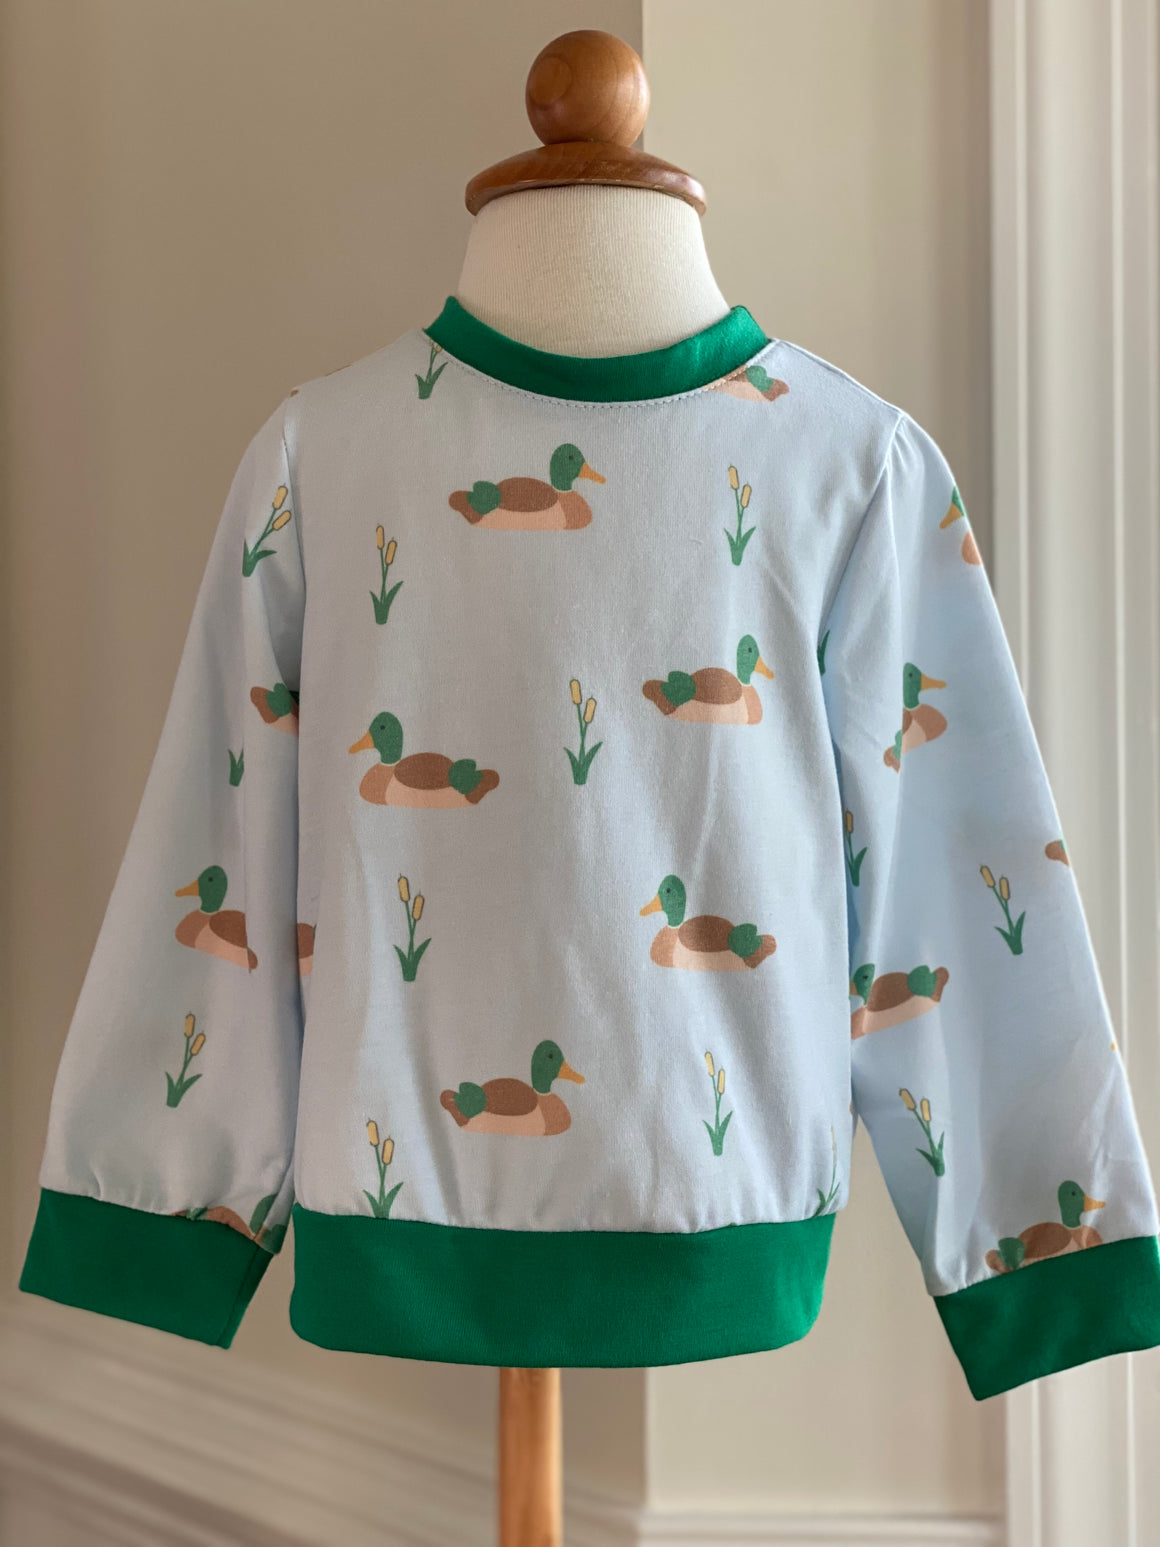 Knit Preppy Duck Unisex Pullover Top